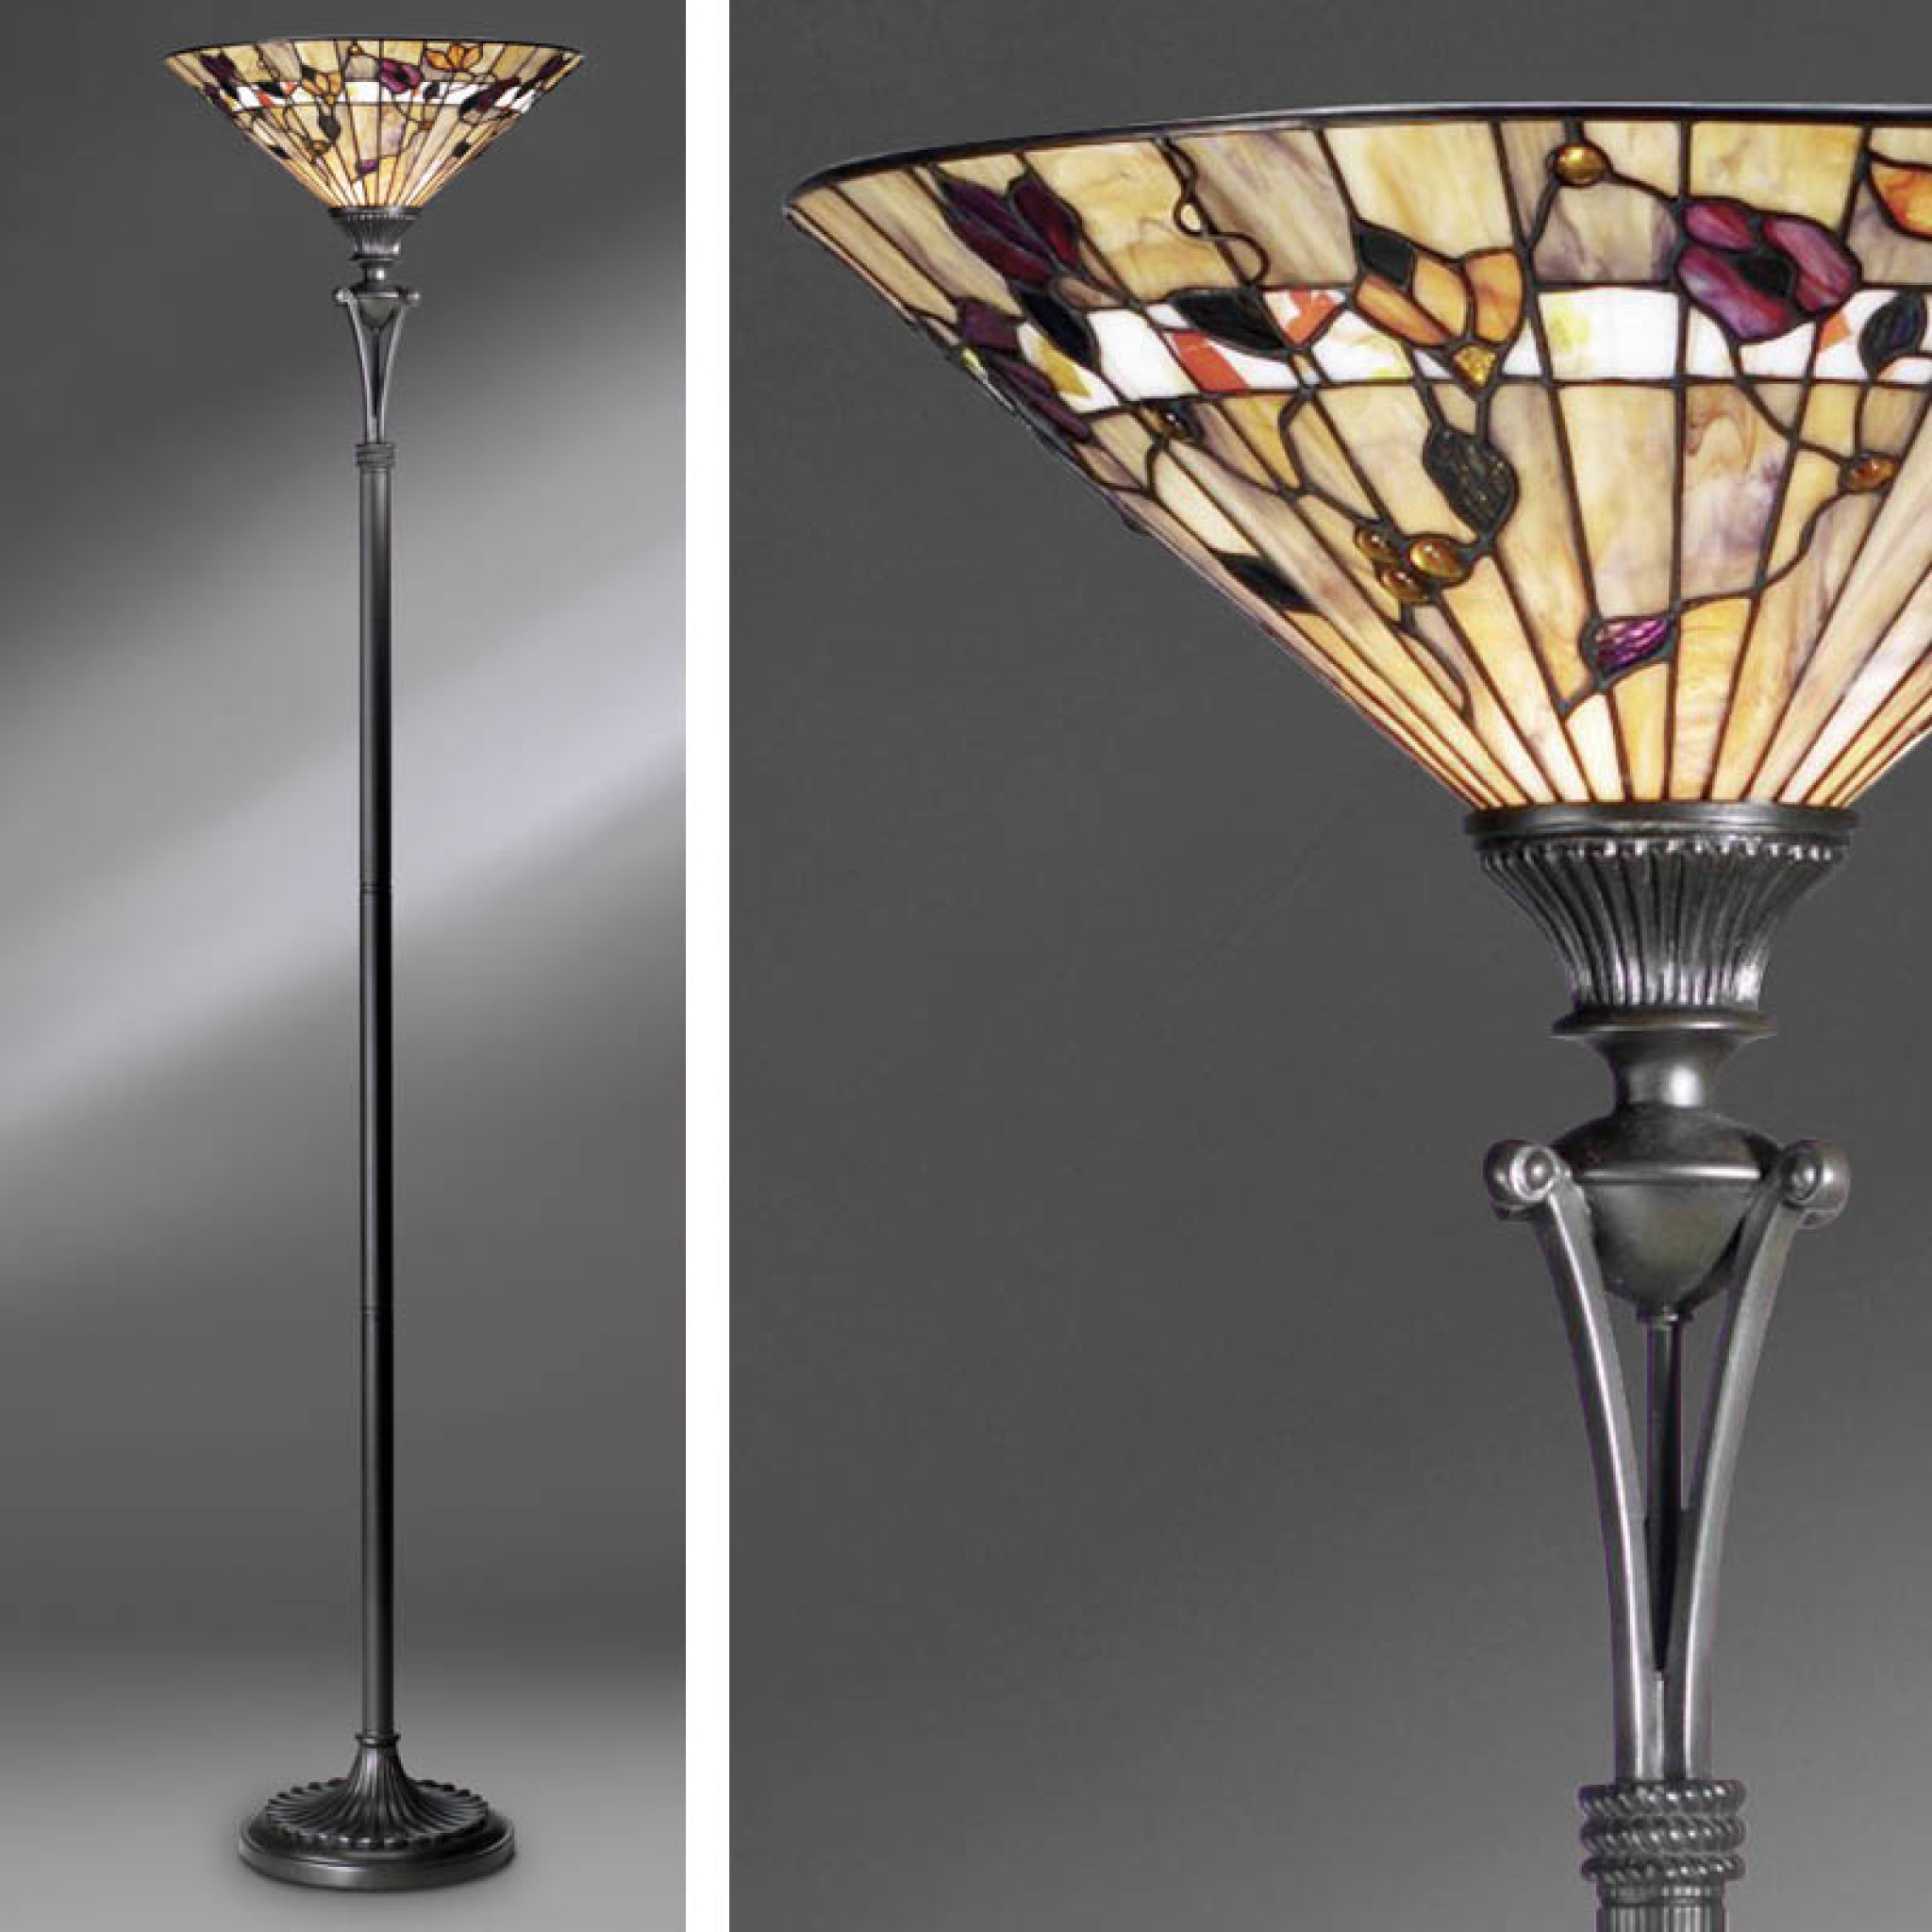 Bernwood Uplighter Floor Lamp Interiors 1900 Tiffany Light within dimensions 2048 X 2048